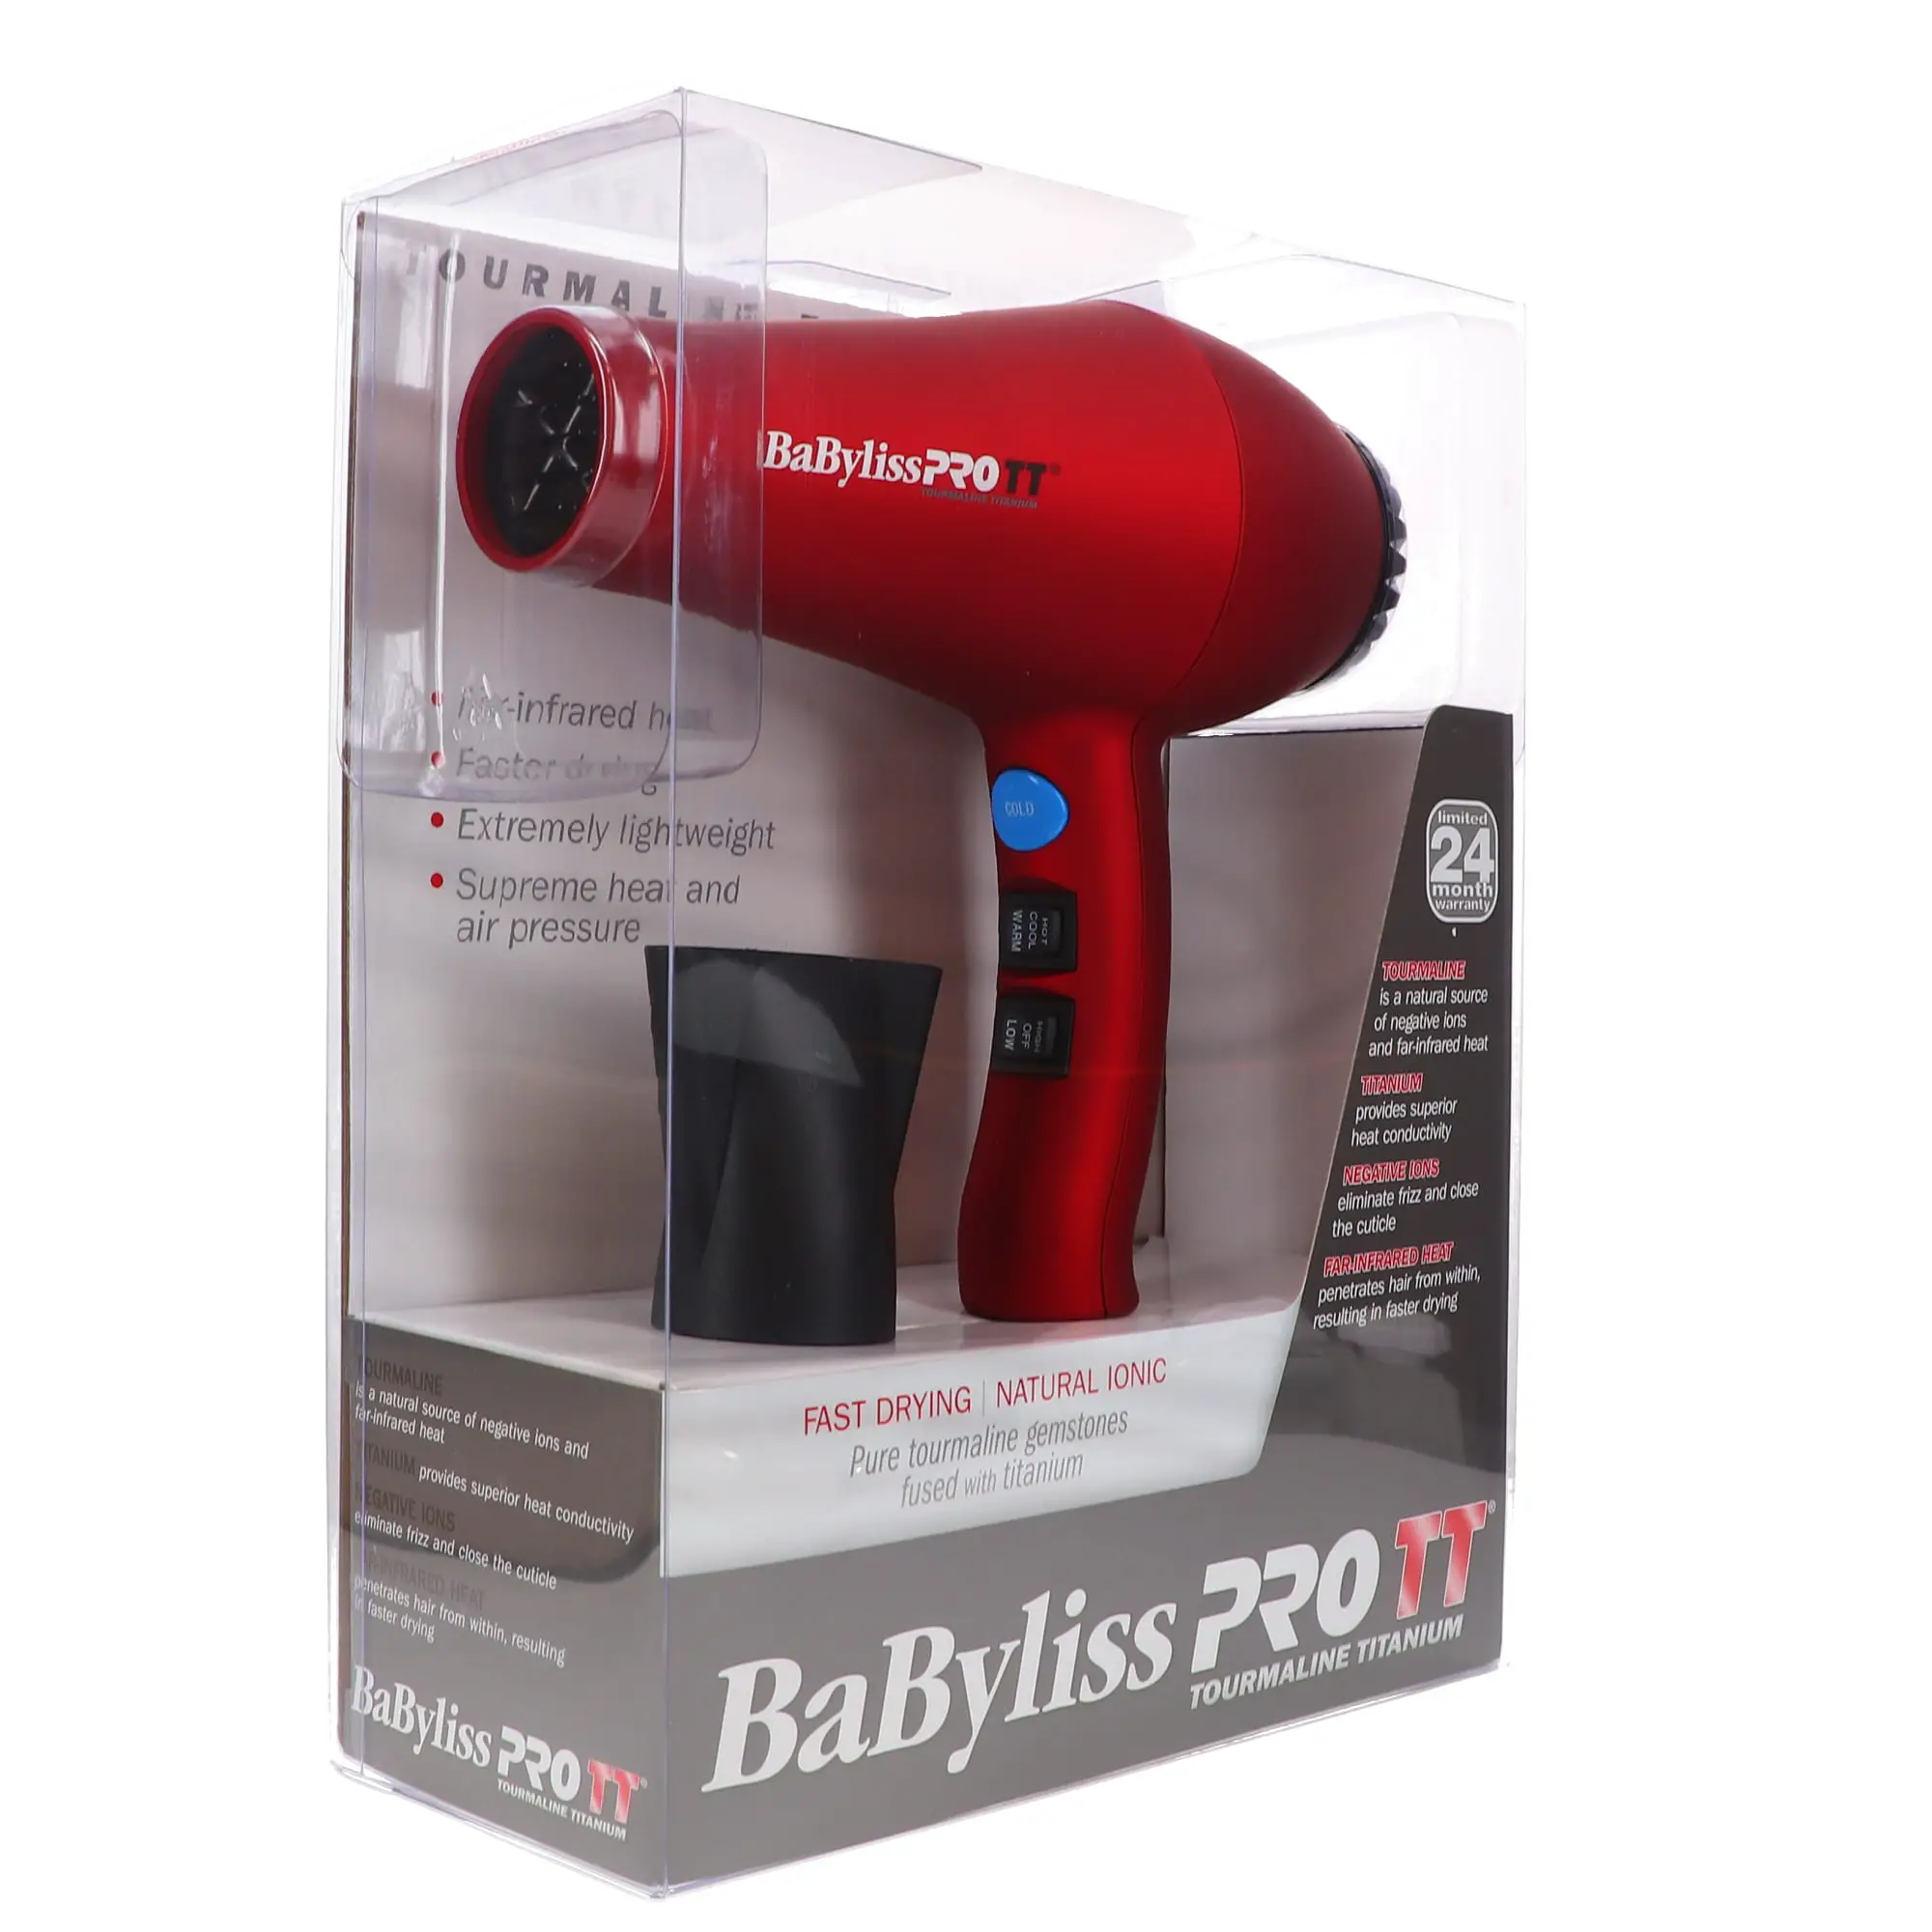 BaByliss Hair Dryer Reviews: Tourmaline Titanium 3000